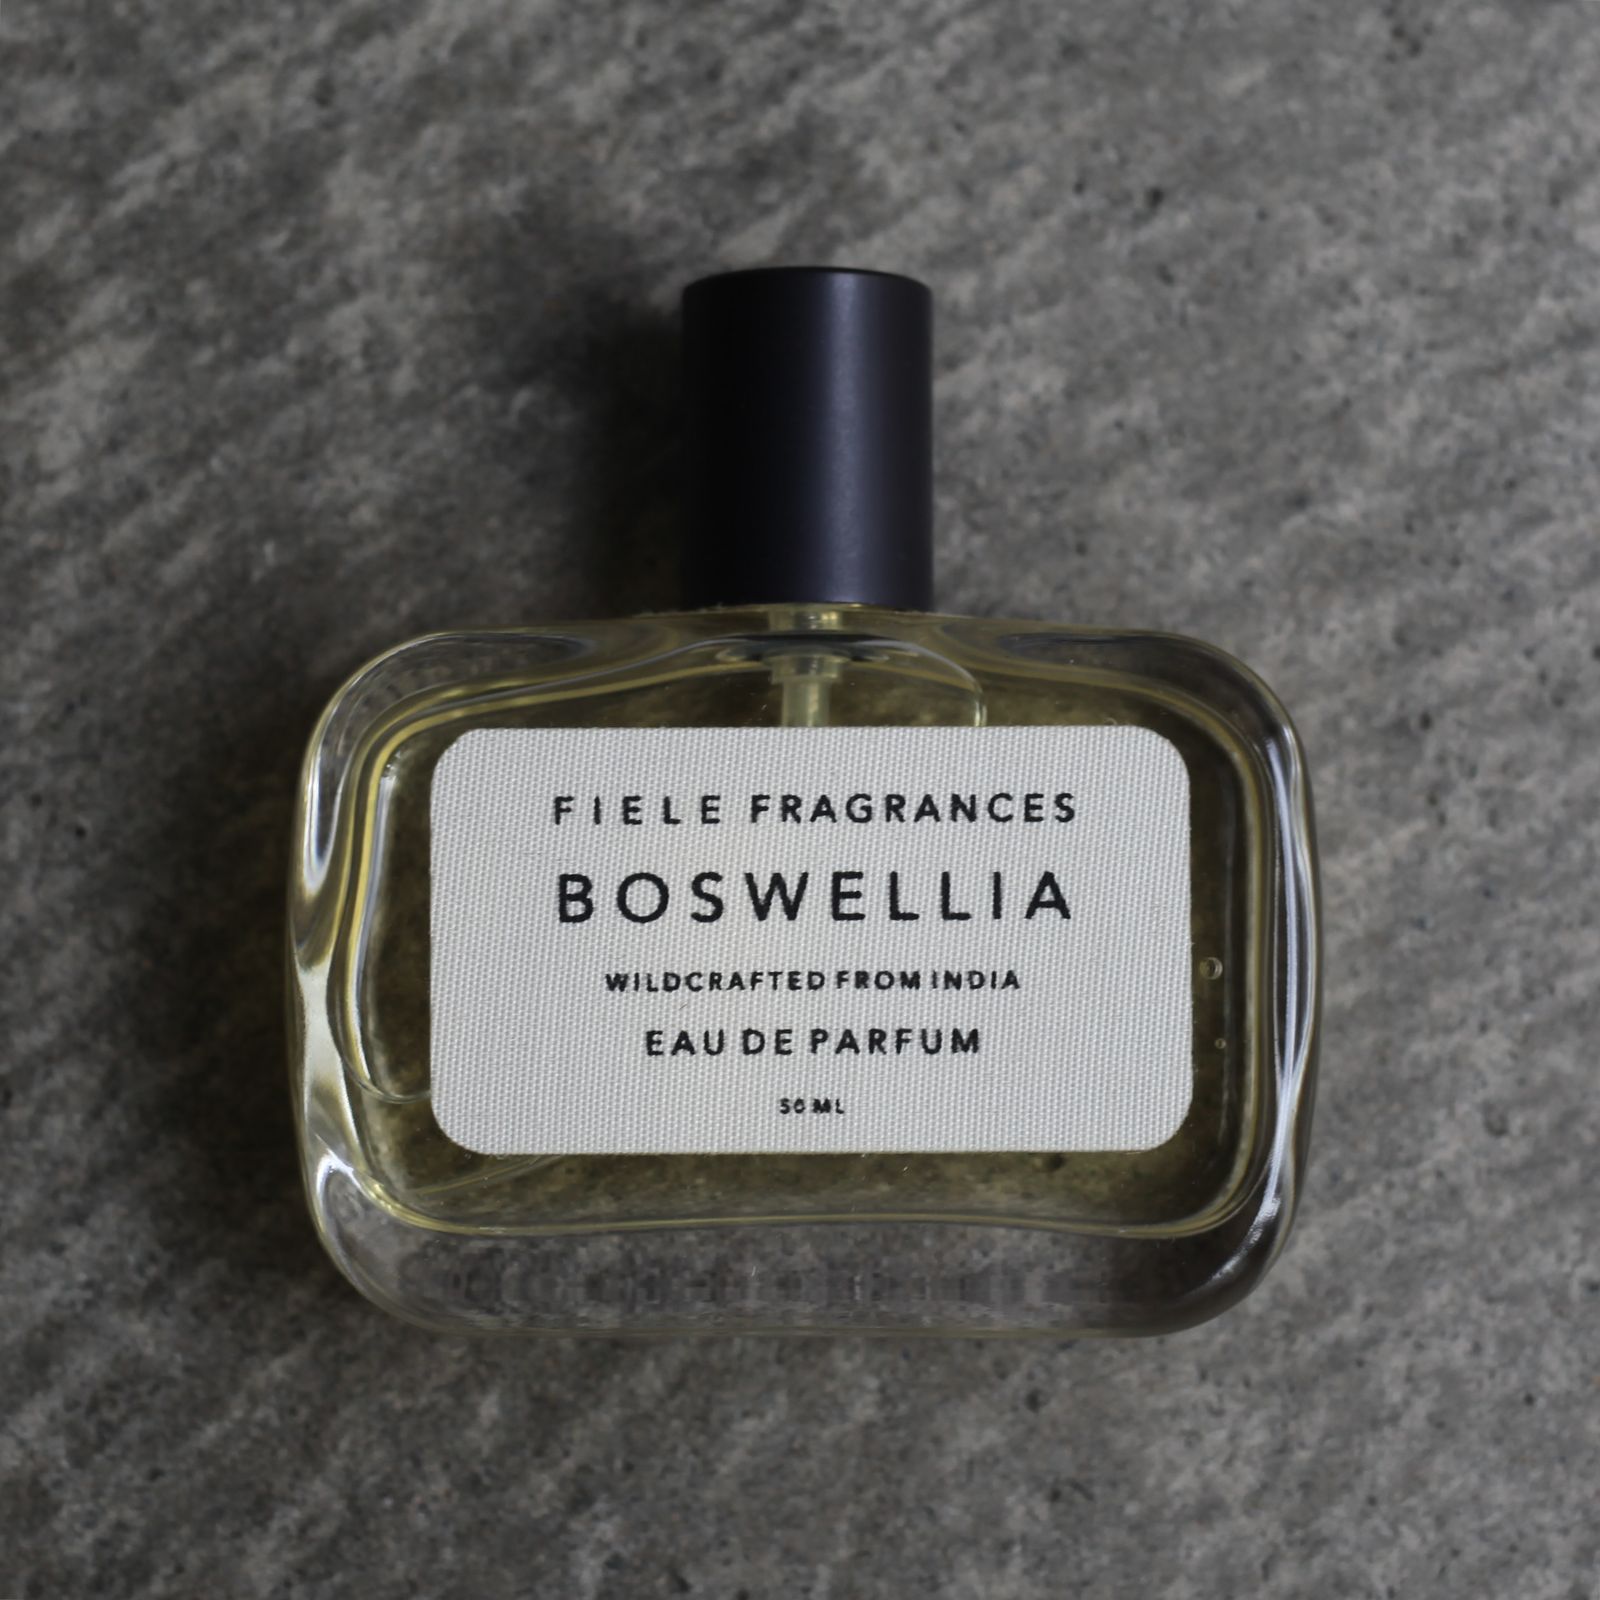 FIELE FRAGRANCES - 【残りわずか】Eau De Parfum 50ml 